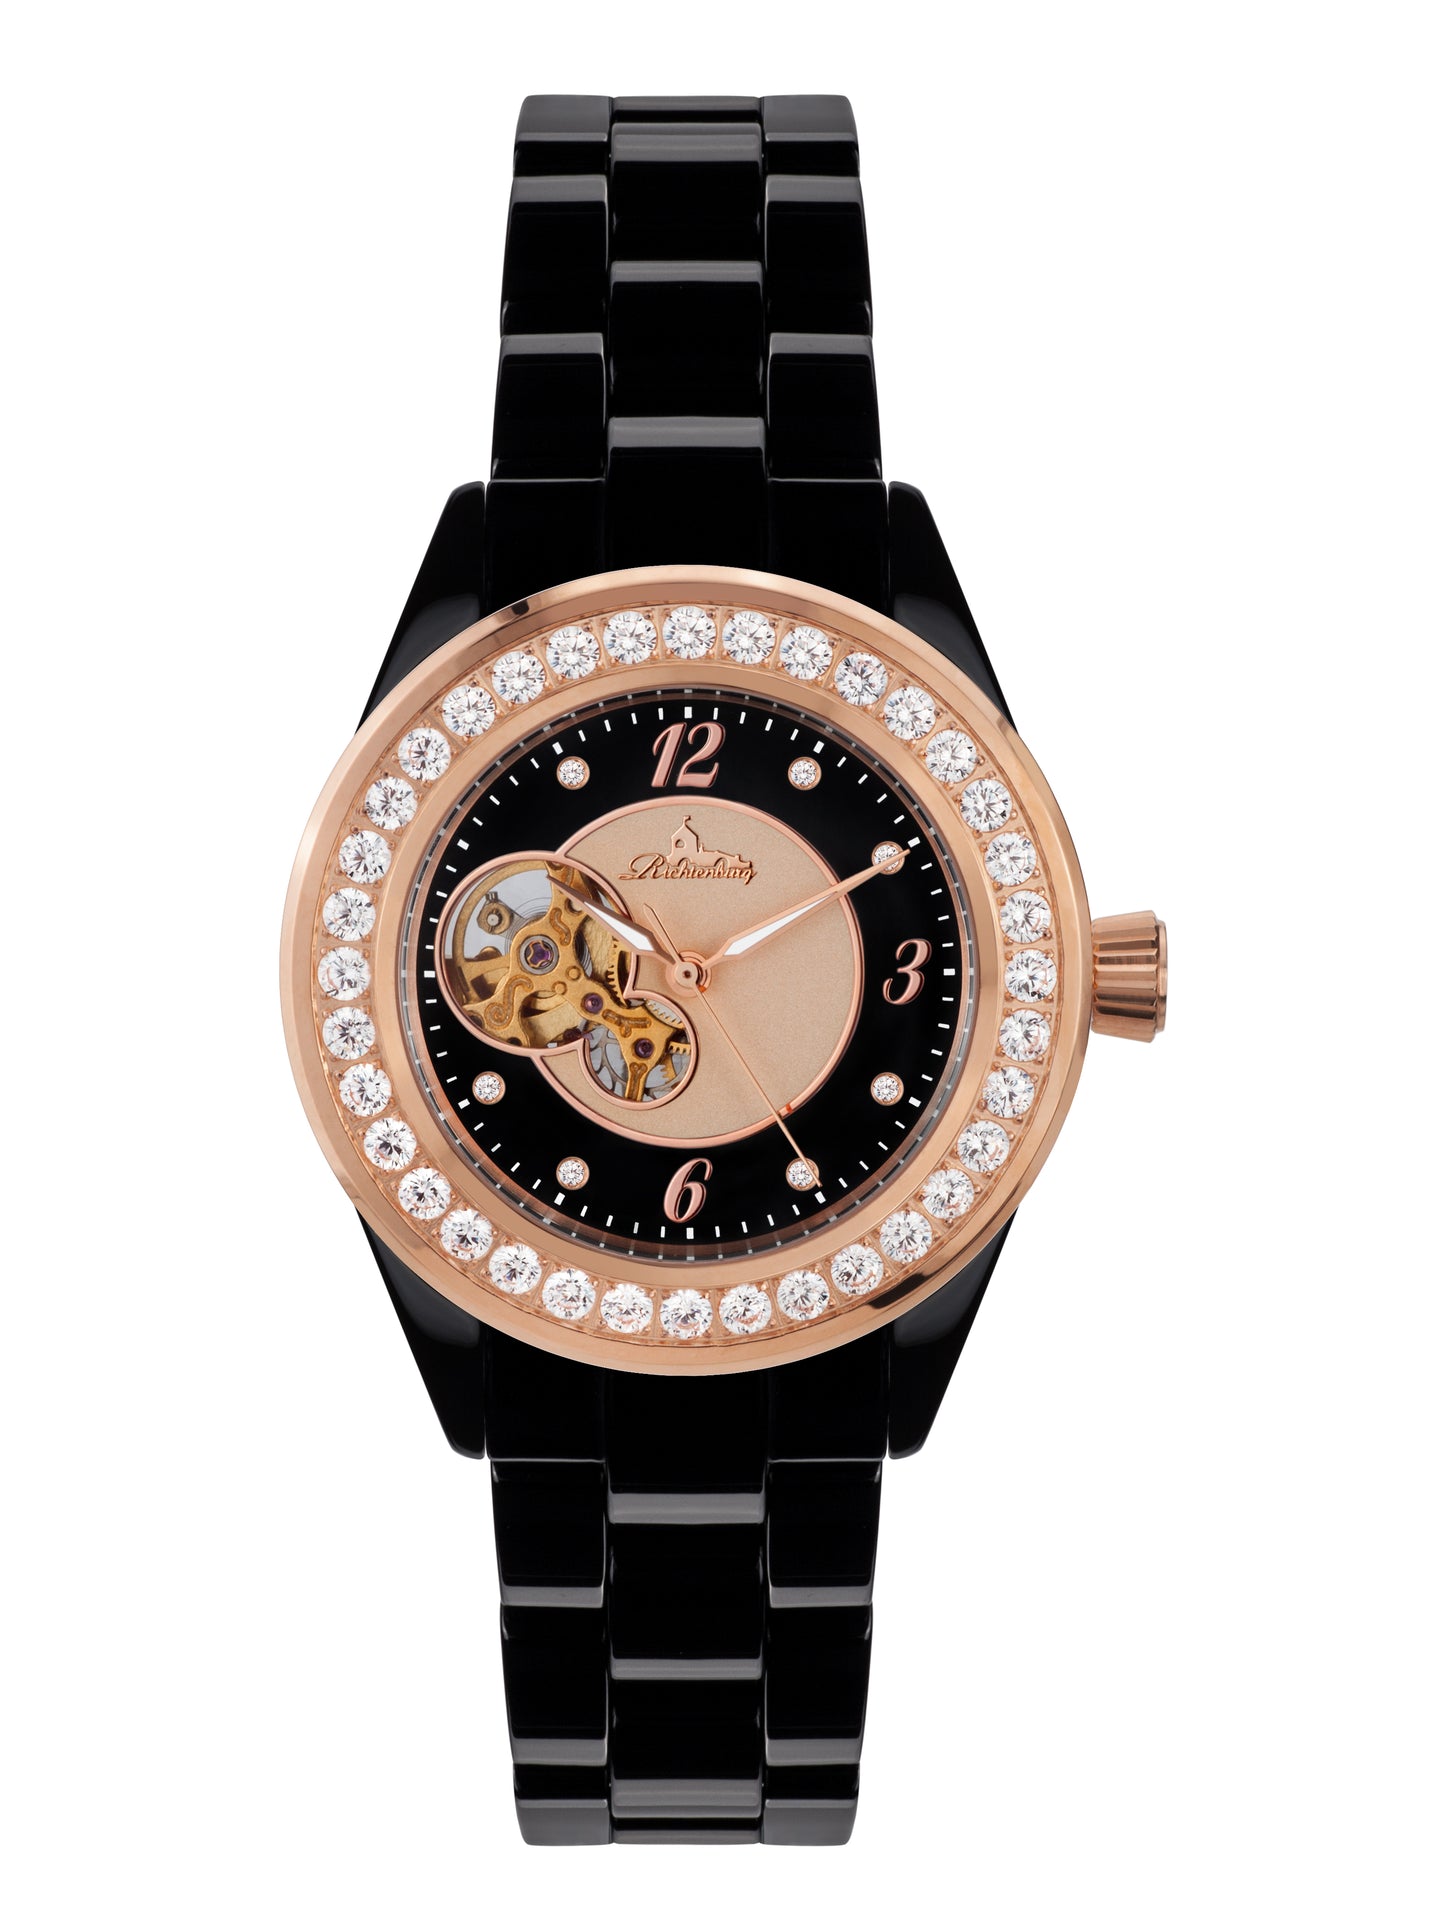 Automatic watches — Venedig Kera — Richtenburg — gold IP white